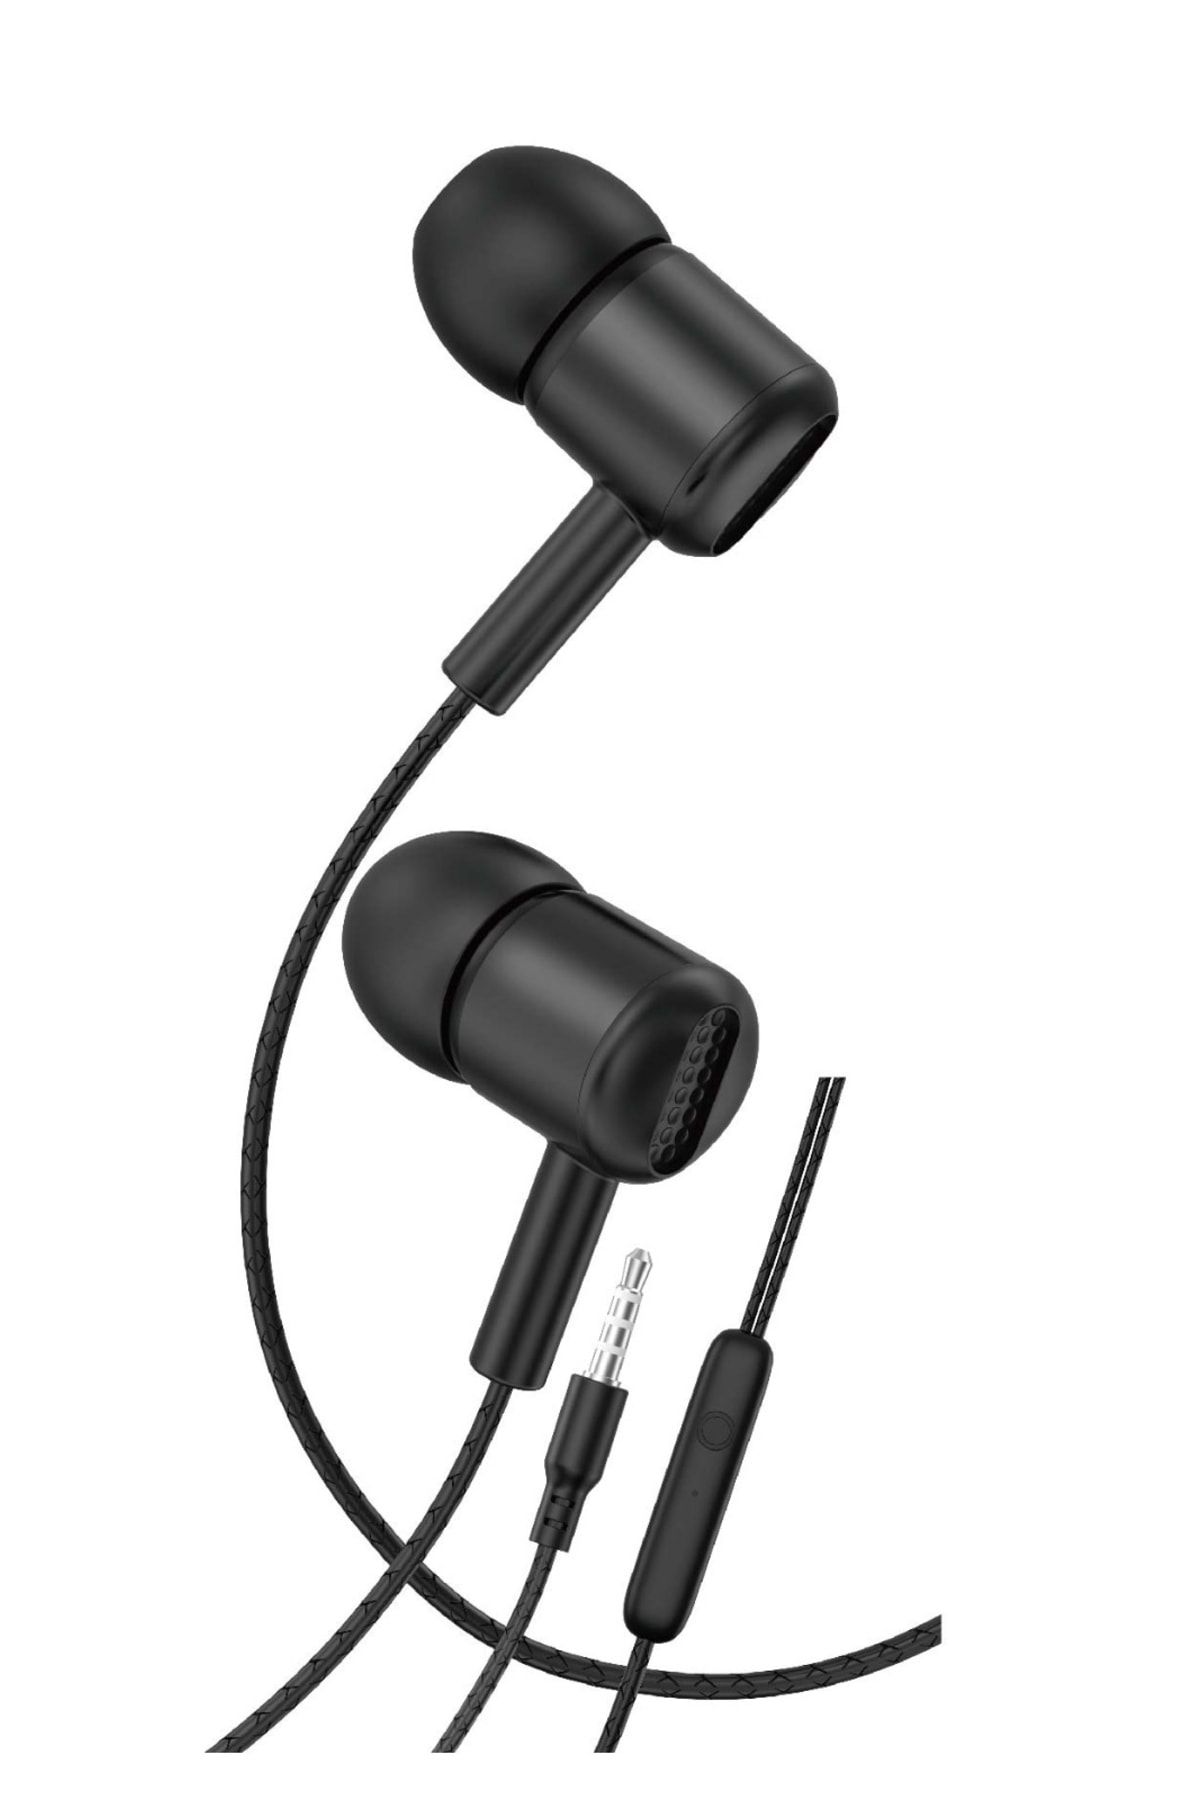 Lucatech Slikonlu Mikrofonlu Kablolu Kulaklık